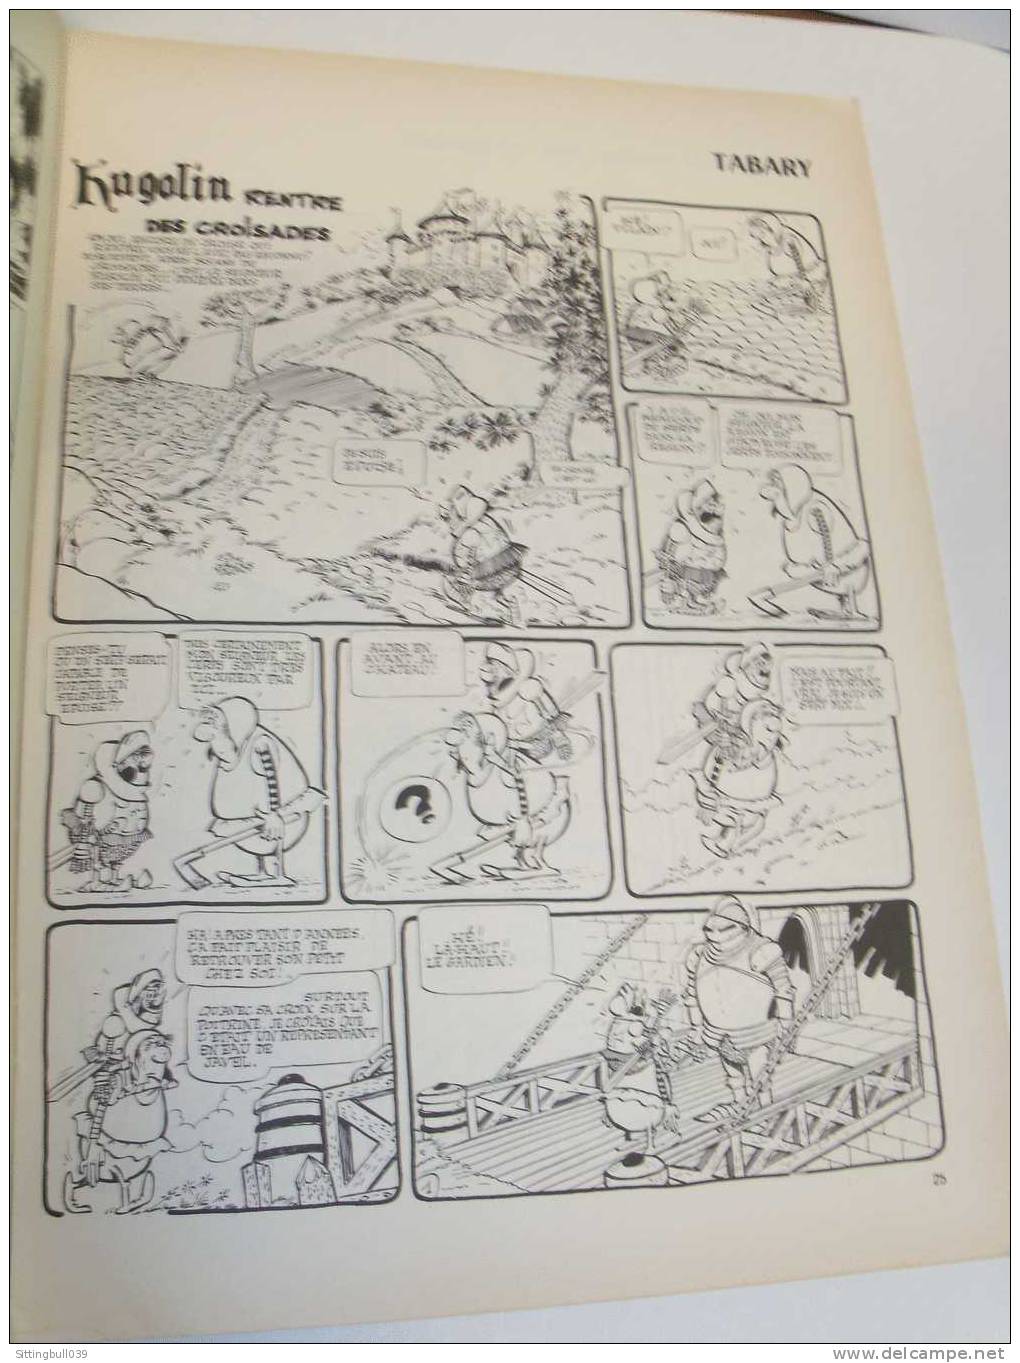 Les Pieds Nickelés Magazine. N° 4. SPE 1971. PELLOS, PRATT, GIGI, TABARY, HAMLIN, MILTON CANIFF, WINDSOR McCAY, etc